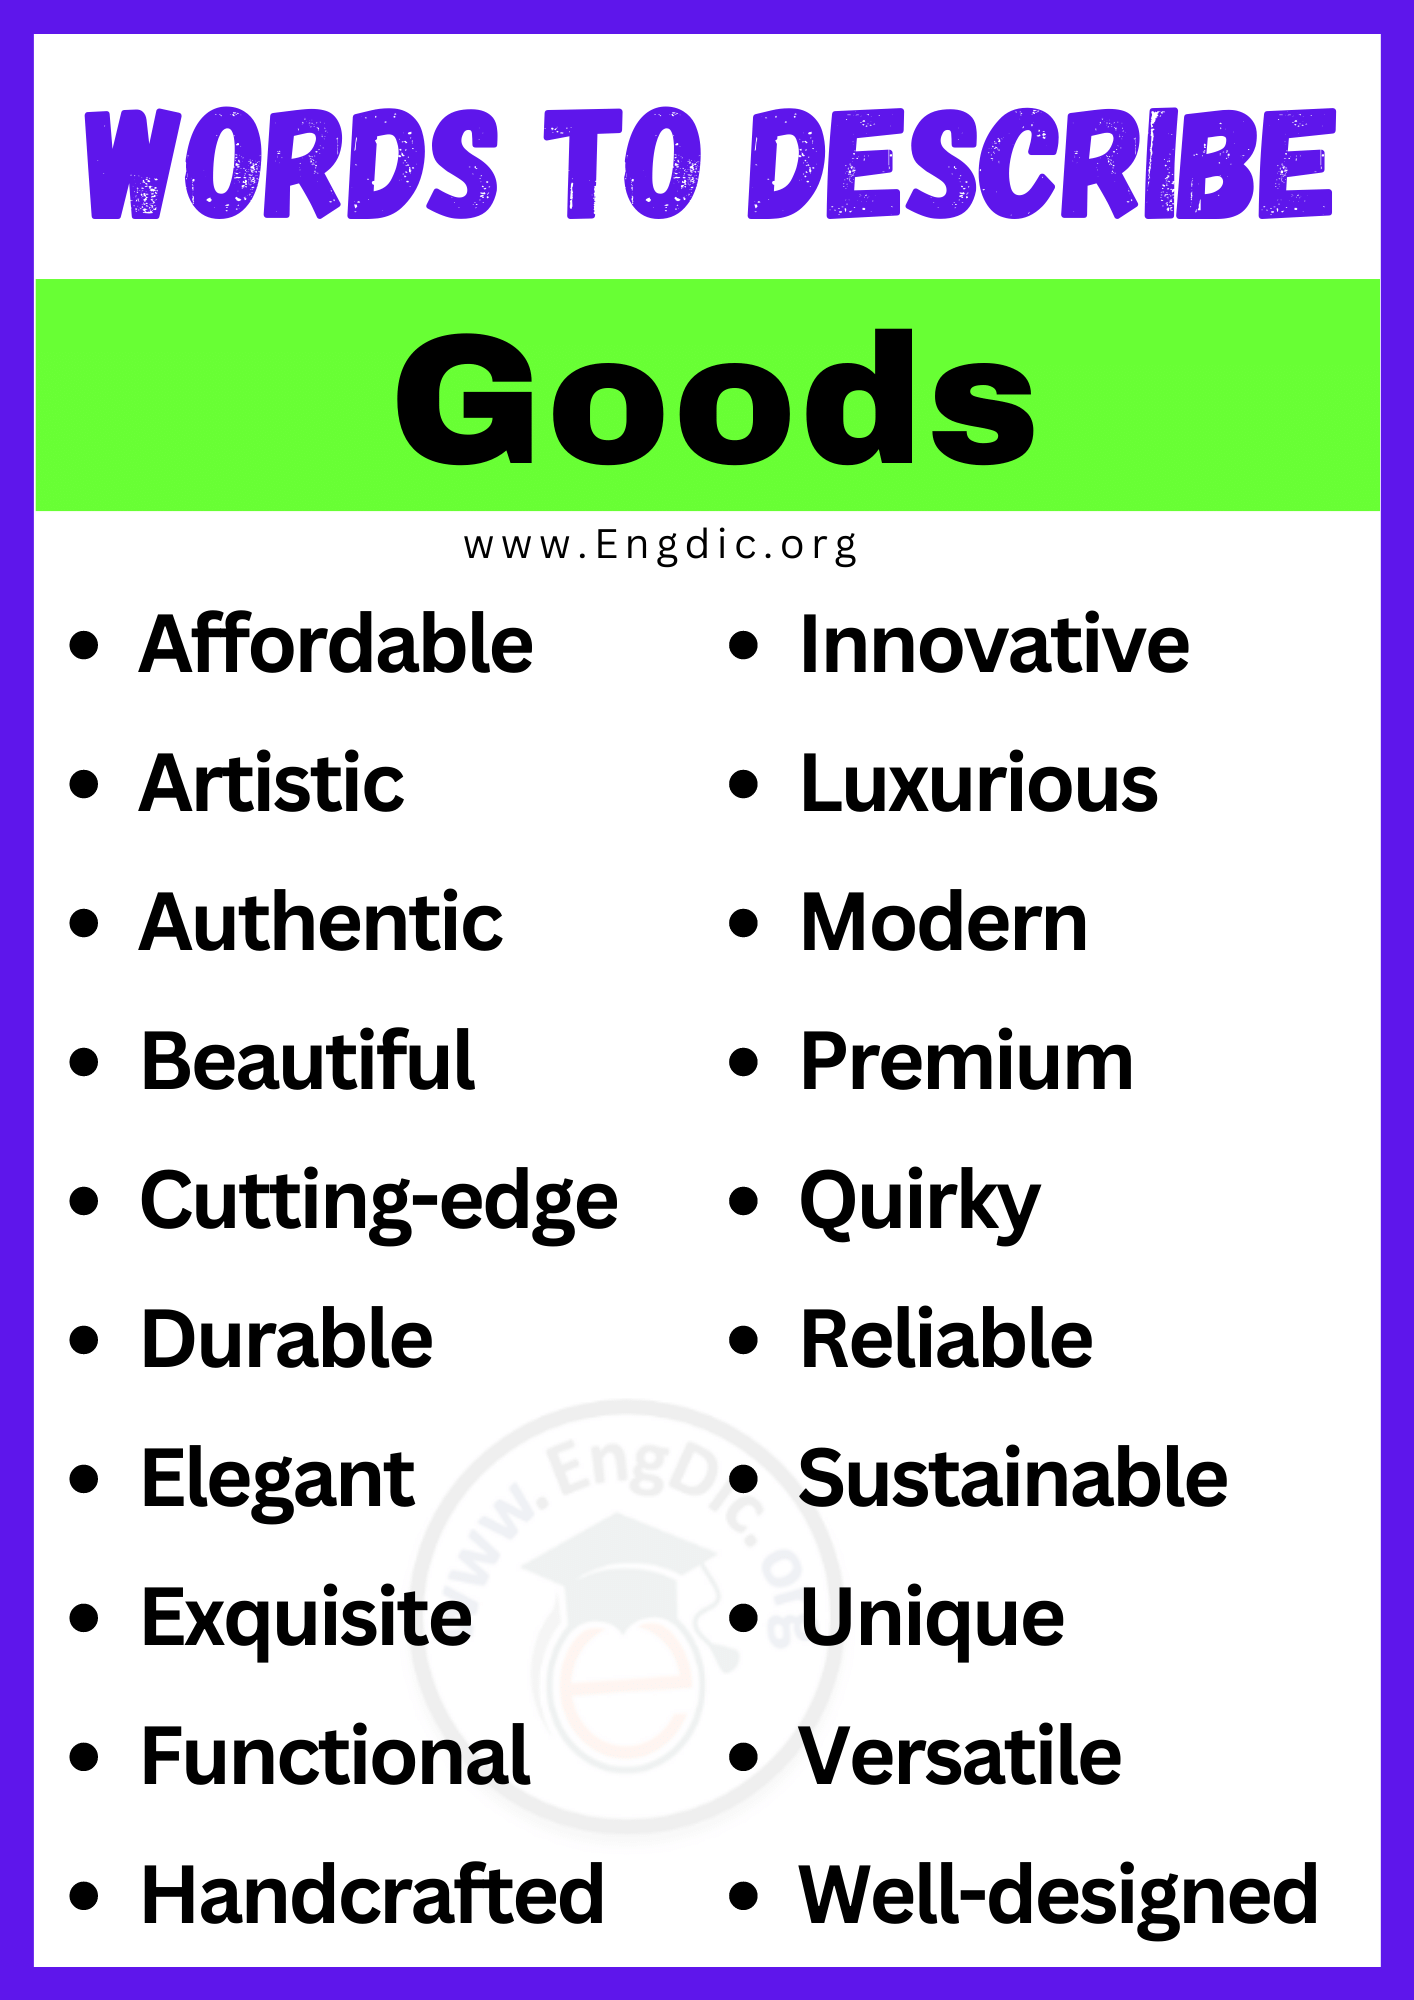 Words to Describe Goods